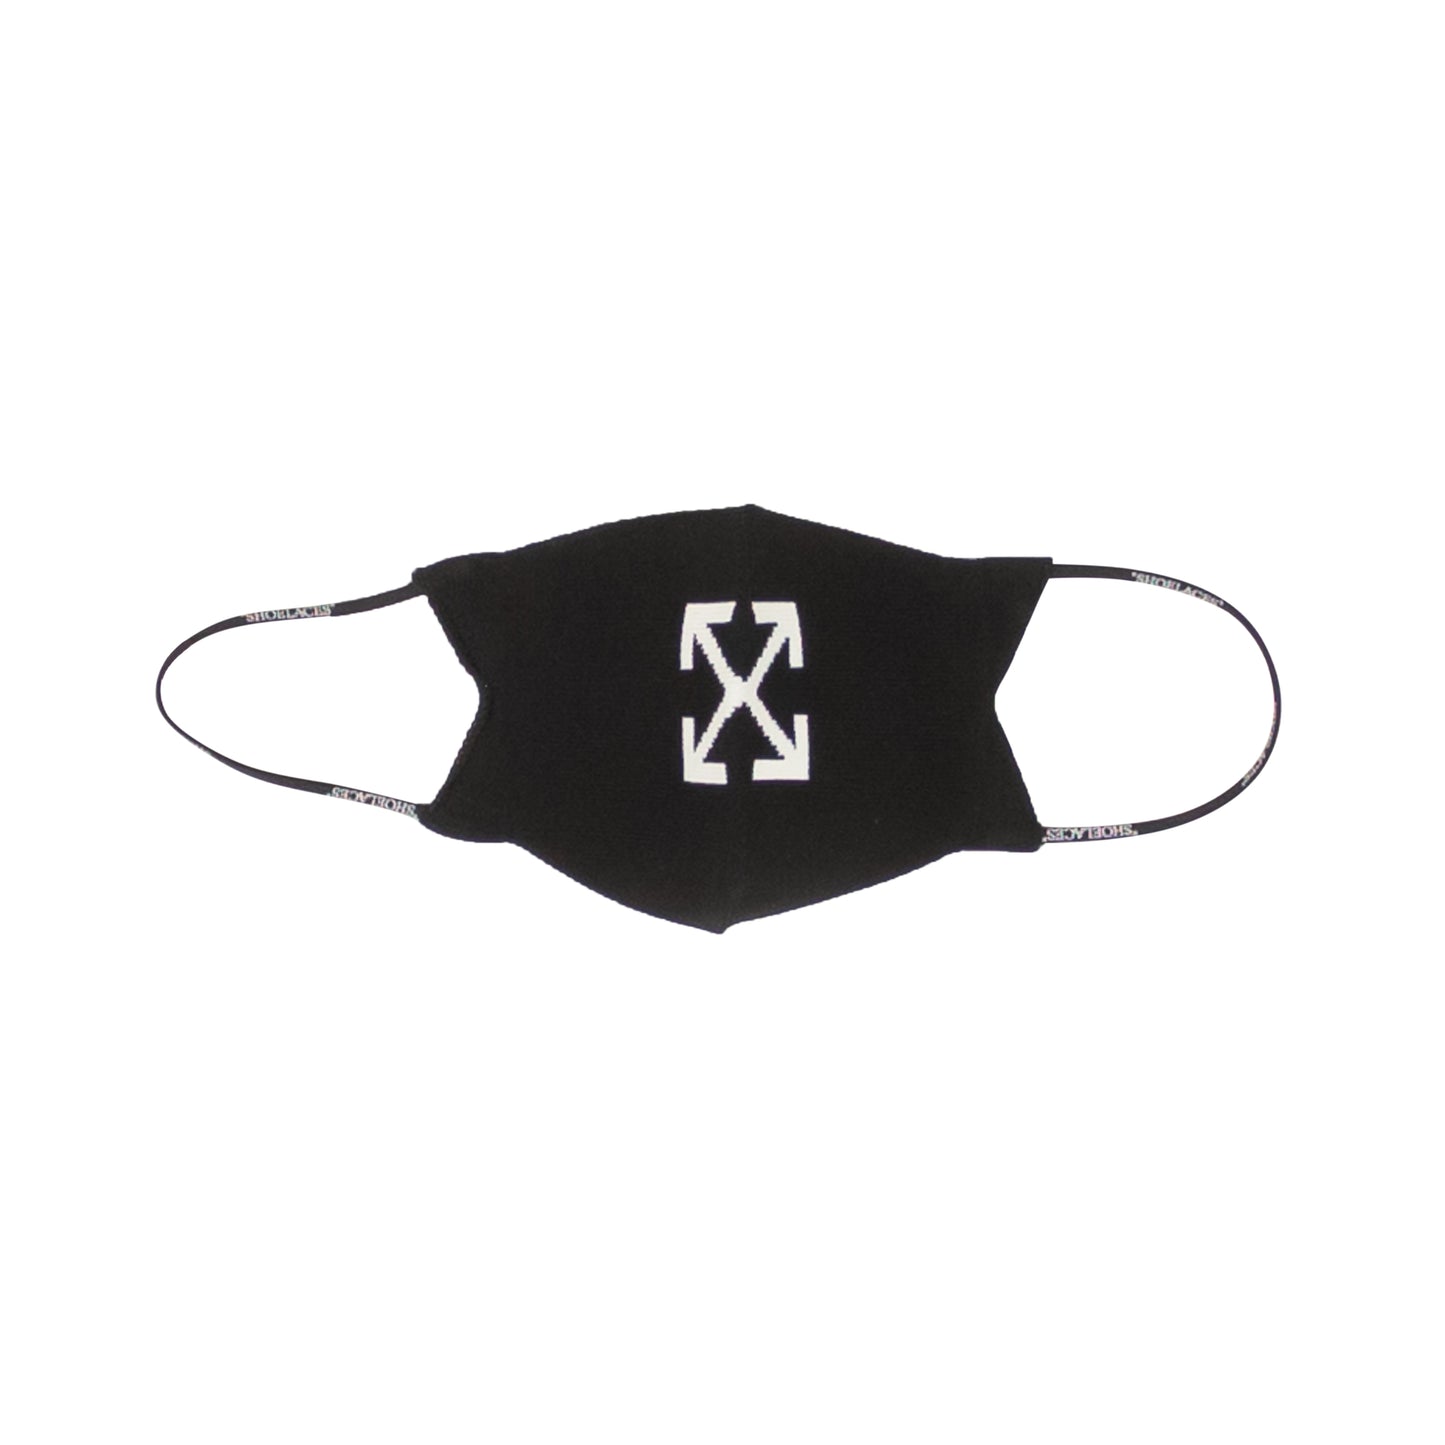 Off-White C/O Virgil Abloh Arrow Knit Simple Mask - Black/White